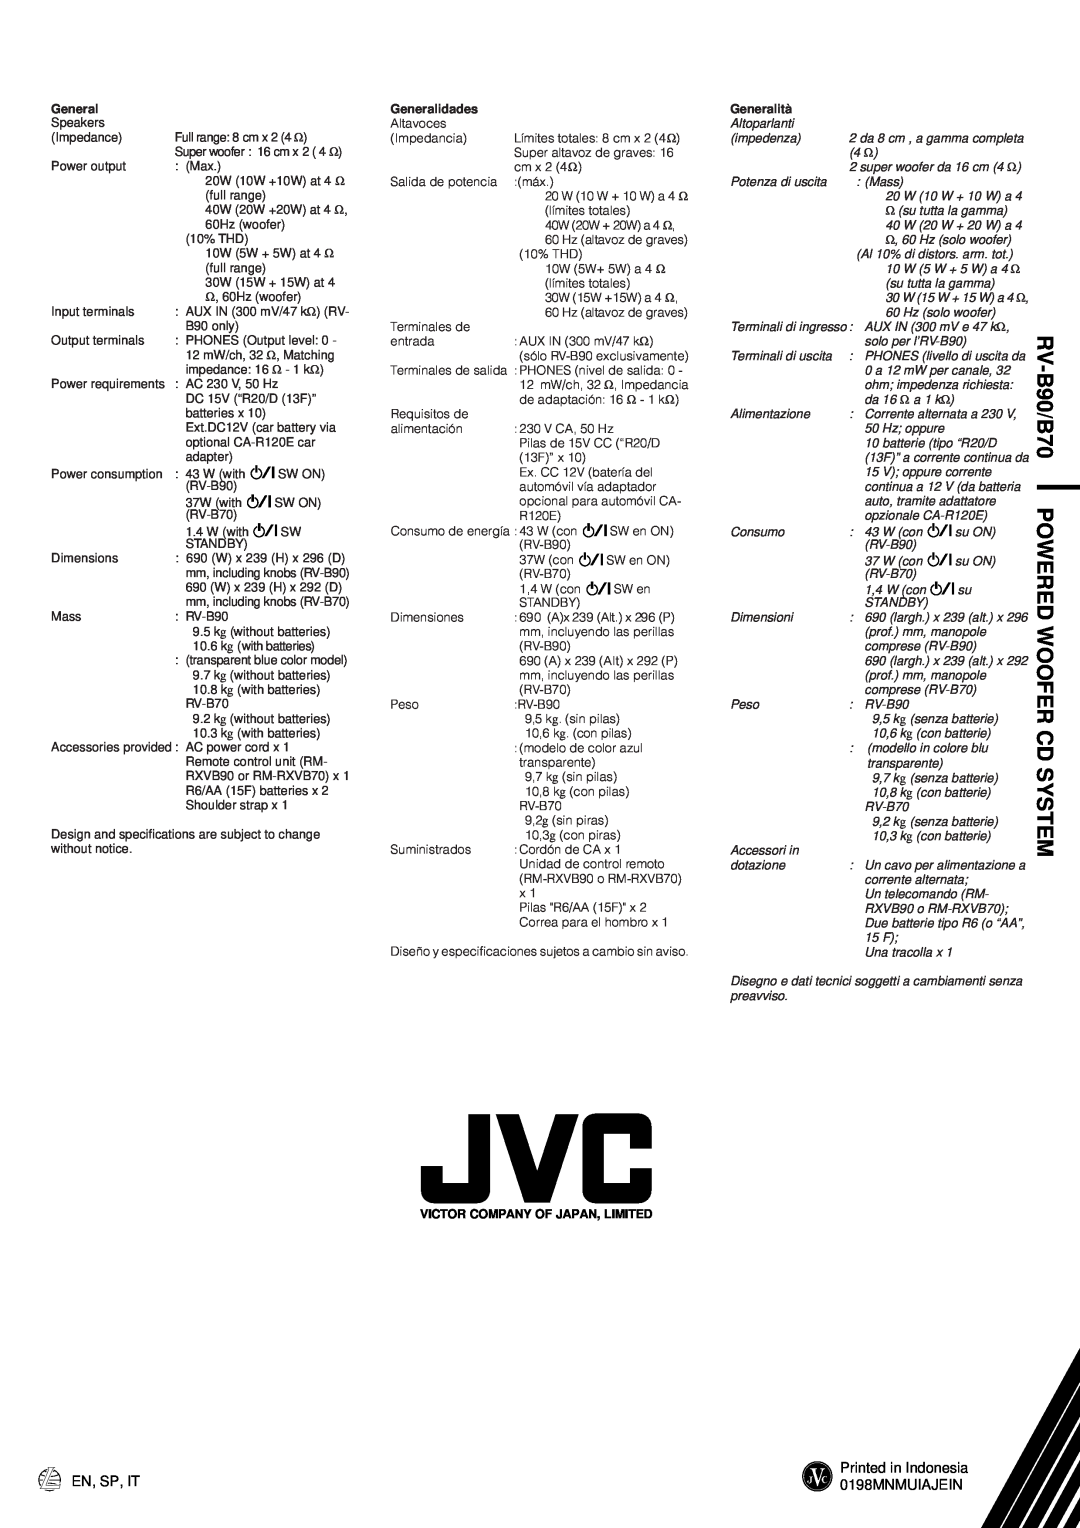 JVC RV-B70 manual RV-B90/B70POWERED WOOFER CD SYSTEM, Generalidades, Victor Company Of Japan, Limited, Generalità 